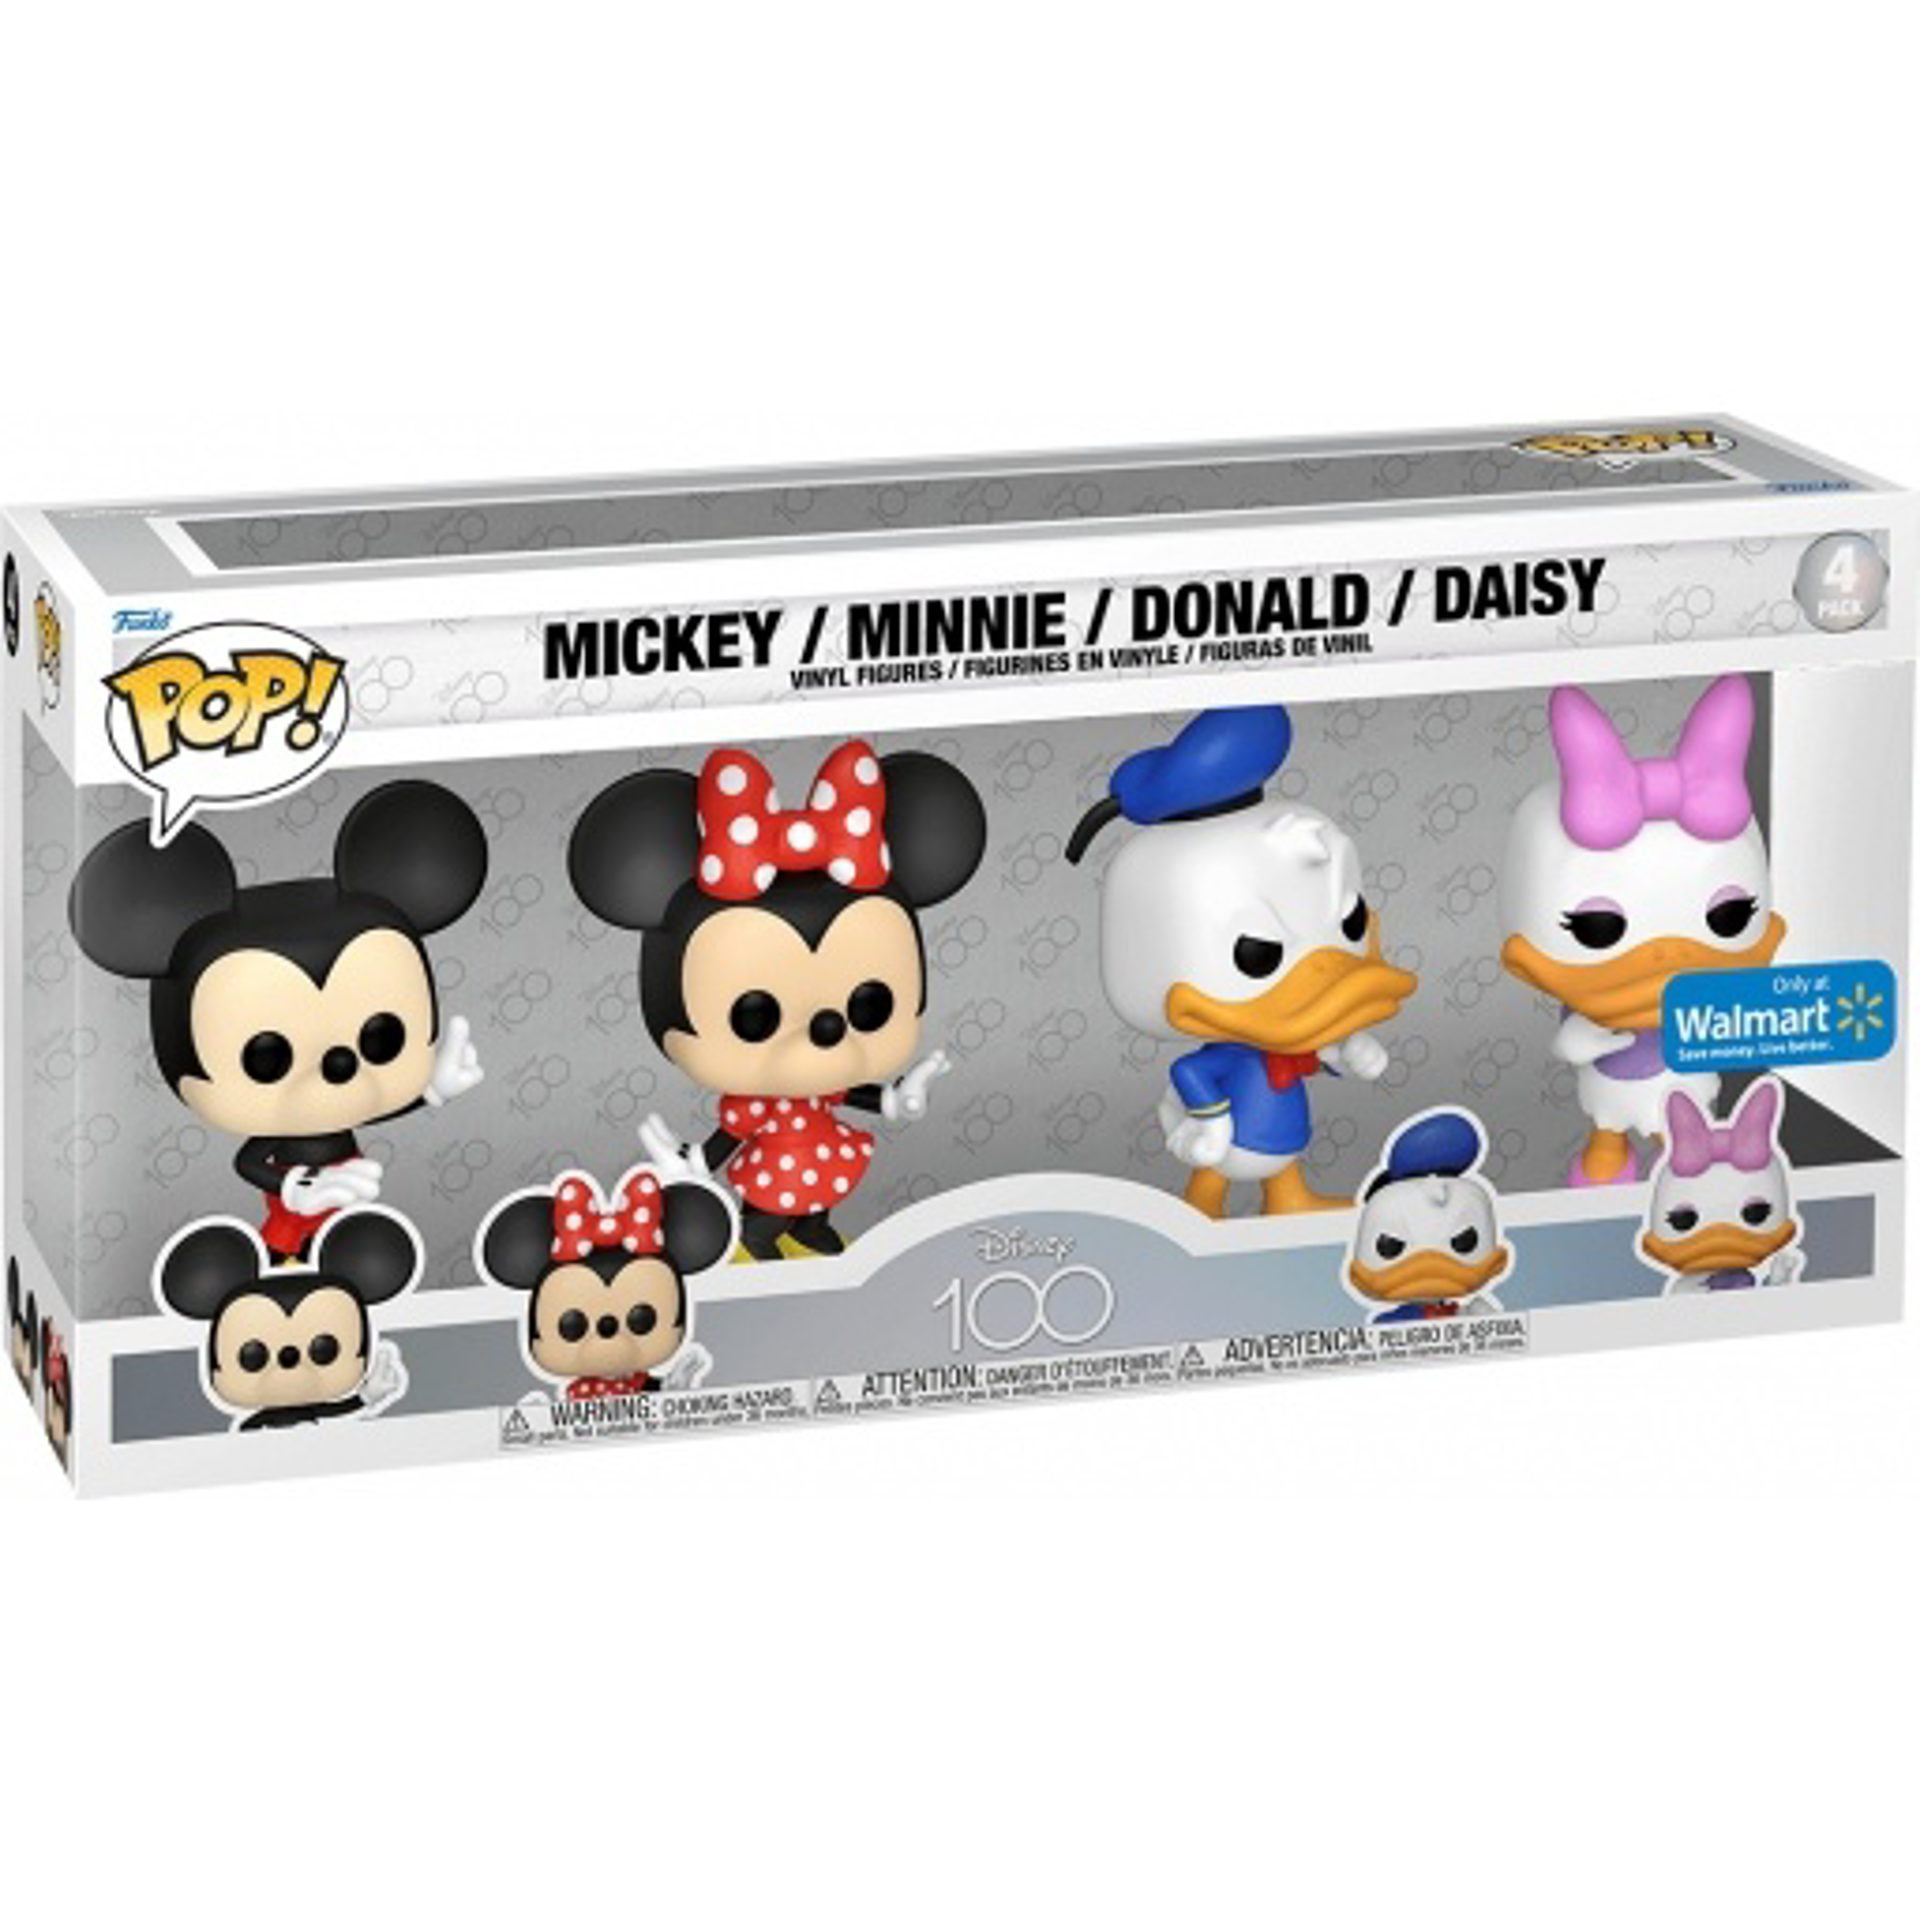 Funko Pop! 4-Pack: Disney 100th: Mickey / Minnie / Donald / Daisy (Special Edition)